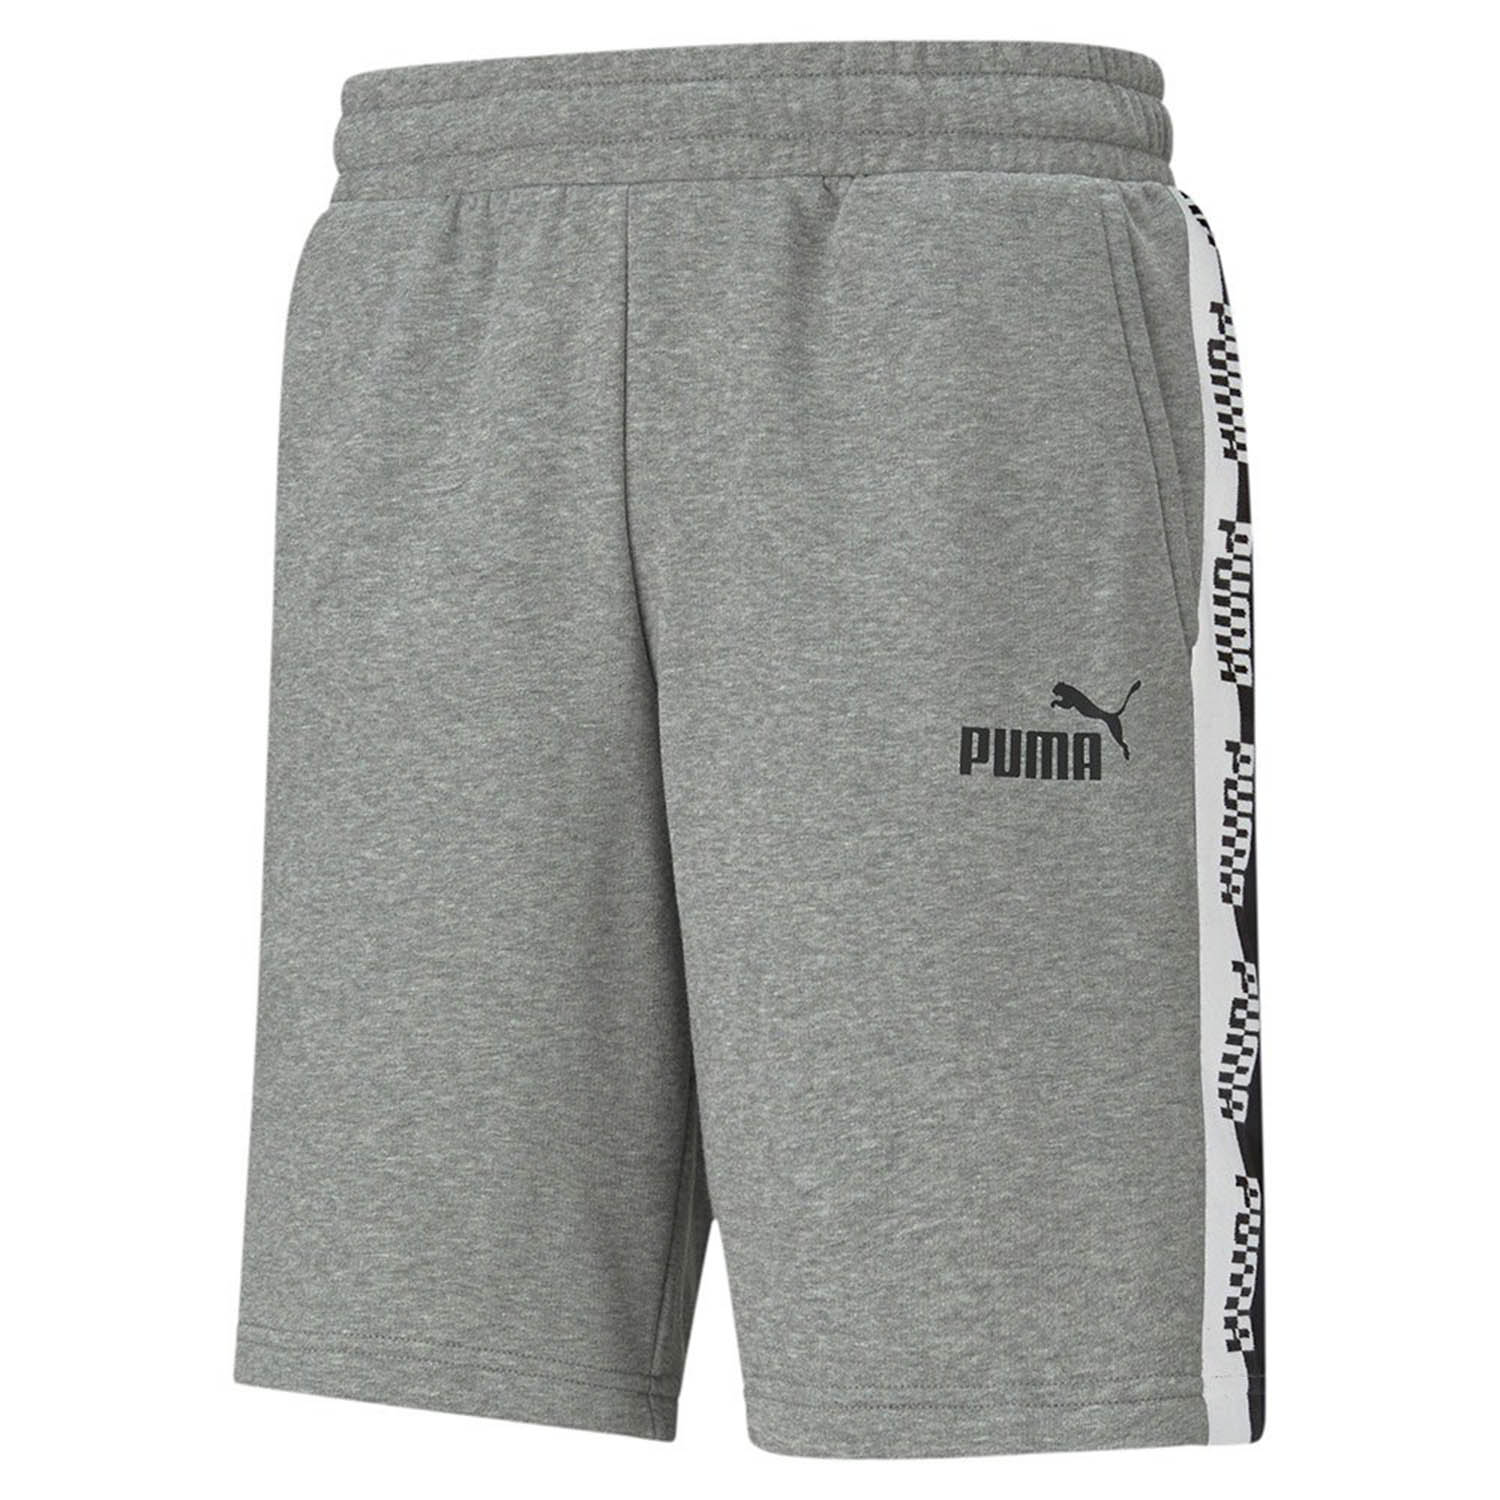 PUMA Amplified Shorts 9 TR Sporthose Trainingshose Übergröße 585786 03 Grau